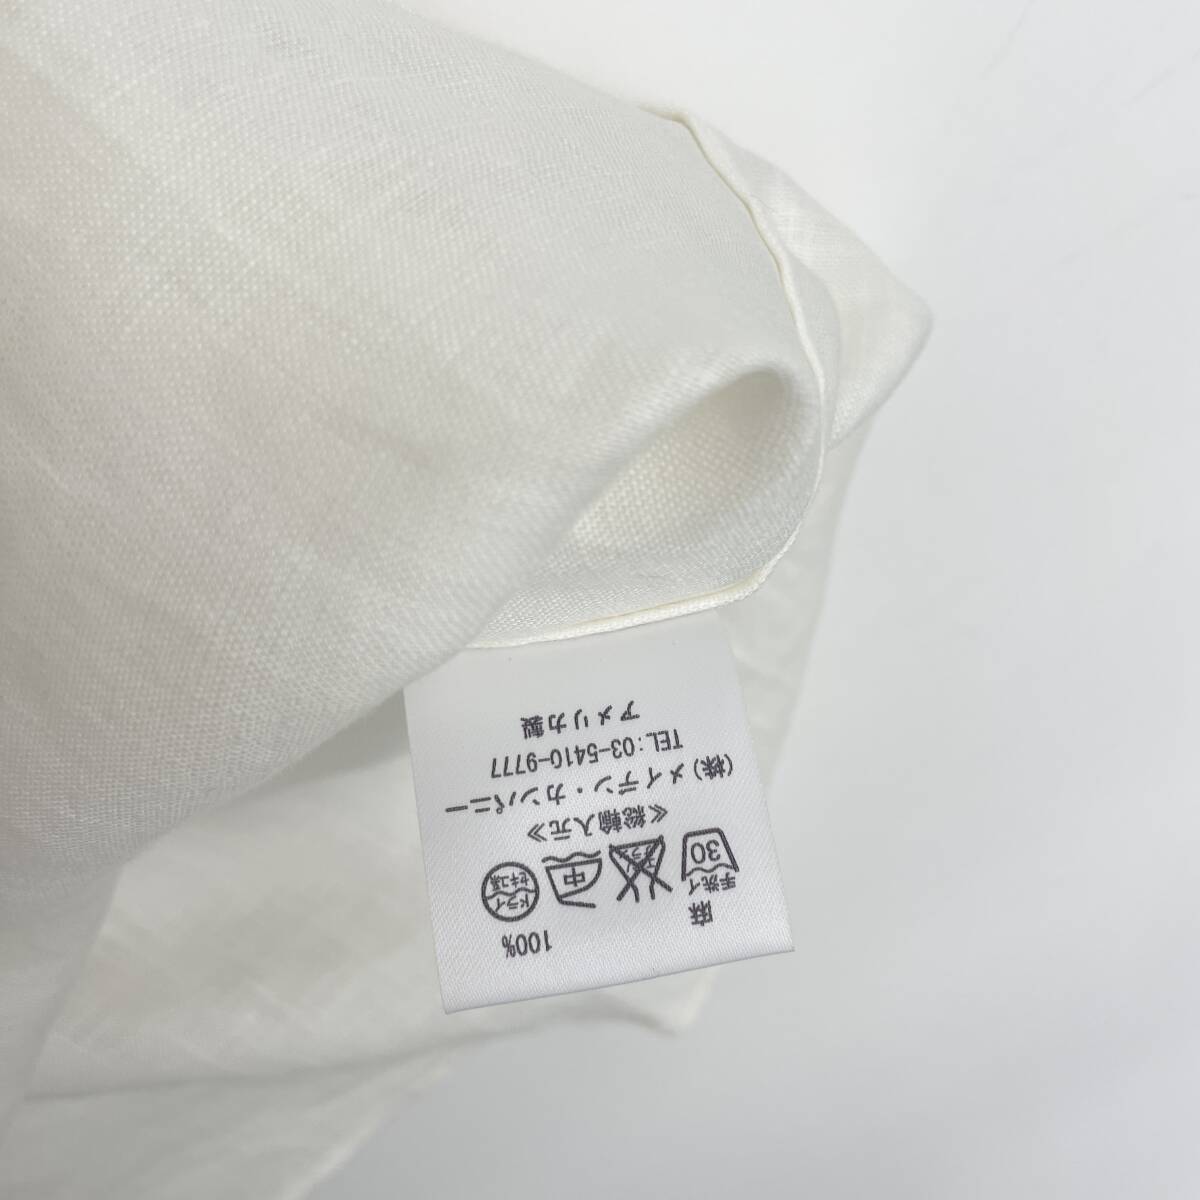 【USA製】INDIVIDUALIZED SHIRTS size/15 (hb) リネン100 春夏 インディビジュアライズドシャツ ノースリーブ シャツ ホワイト 米国製